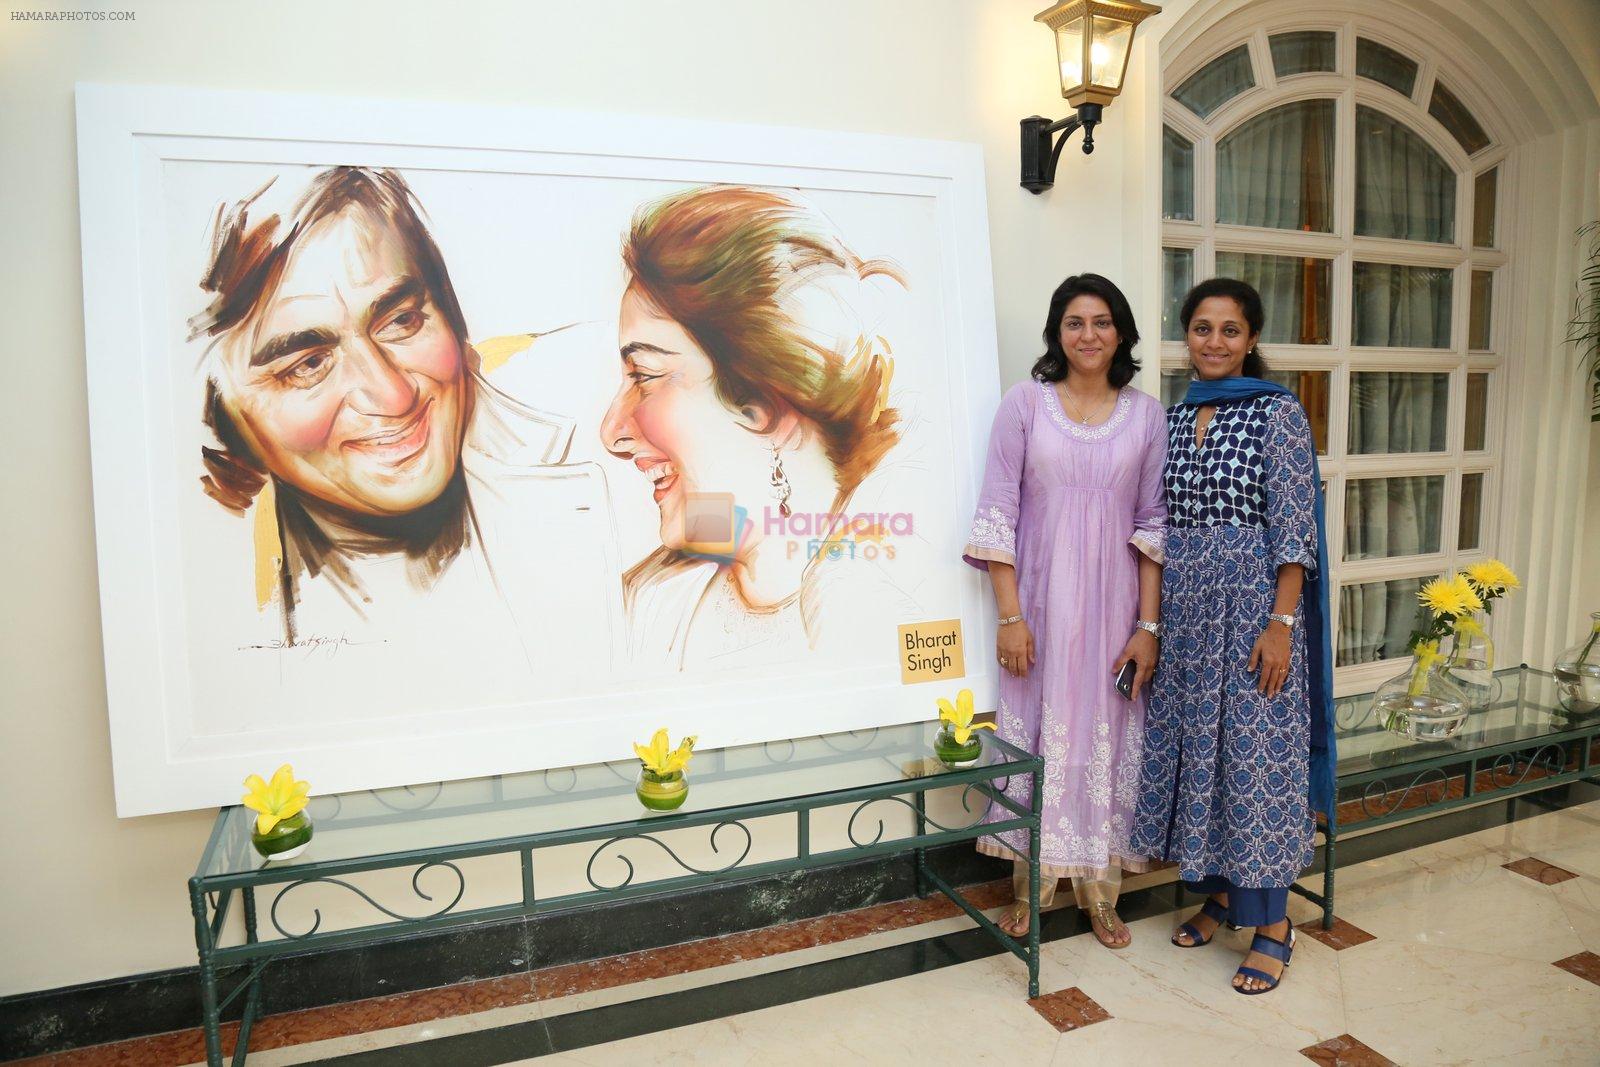 Priya Dutt at Nargis Dutt Foundation art event on 11th June 2016